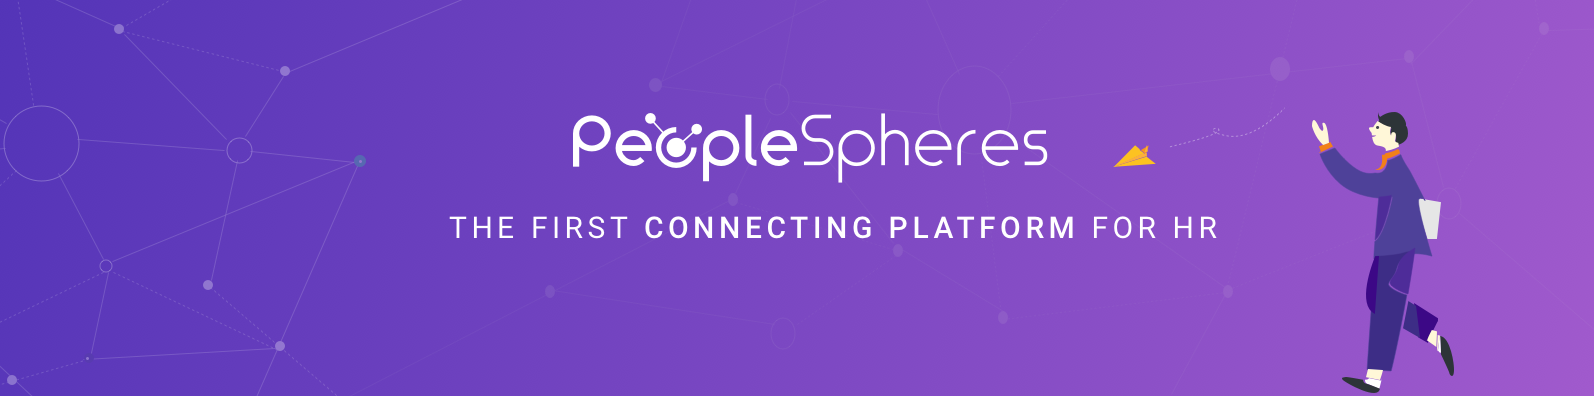 Review PeopleSpheres: Modernization and efficient integration of your HR system - Appvizer